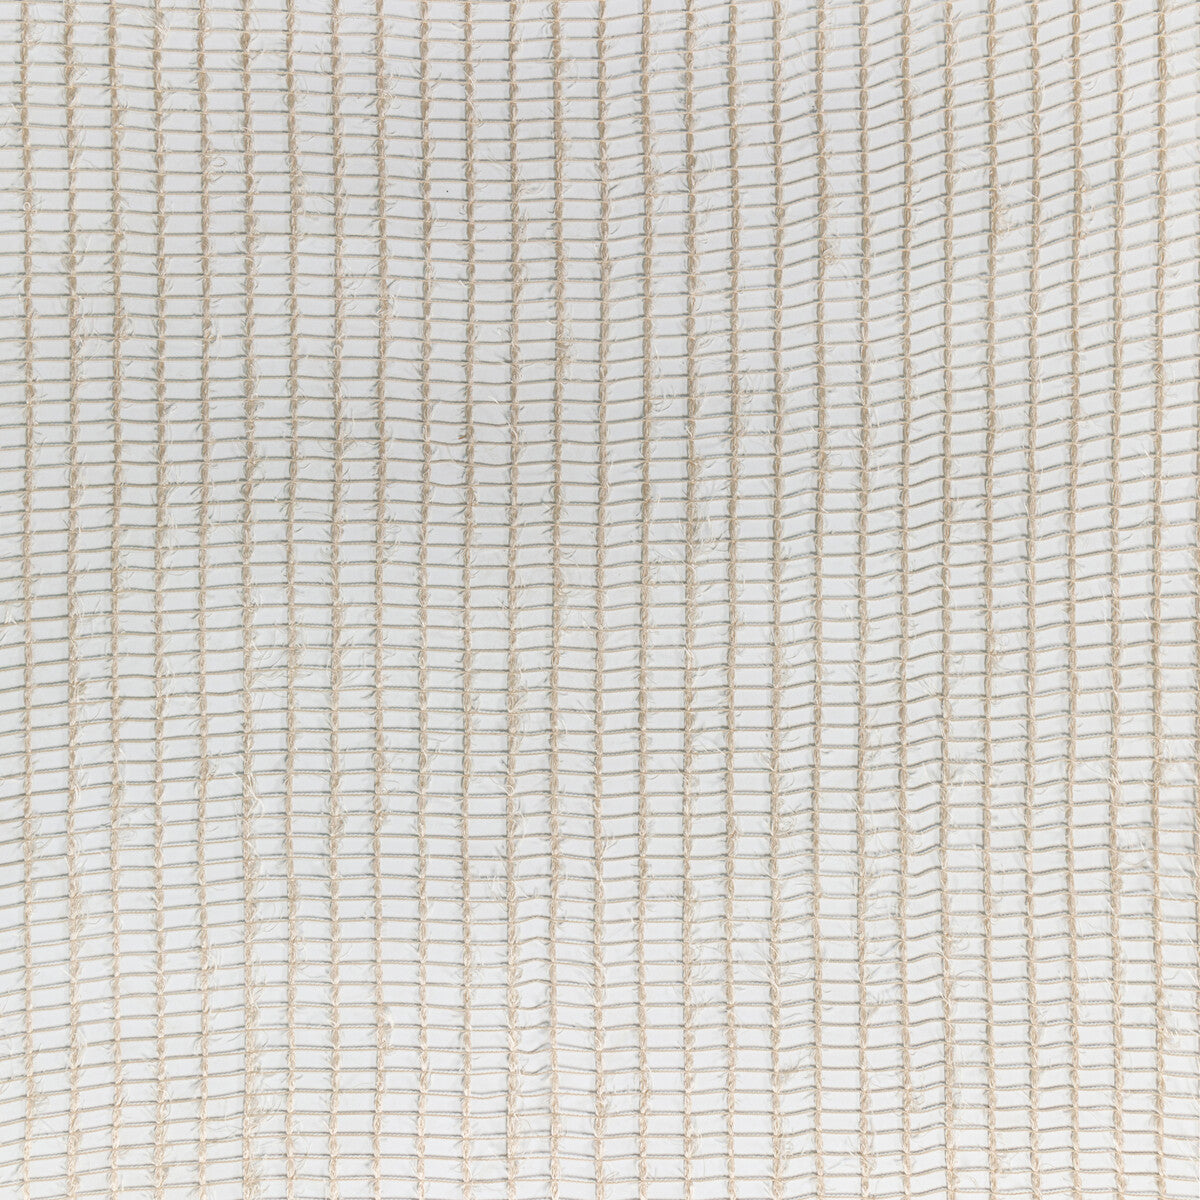 Kravet Basics fabric in 4856-16 color - pattern 4856.16.0 - by Kravet Basics in the Gis collection